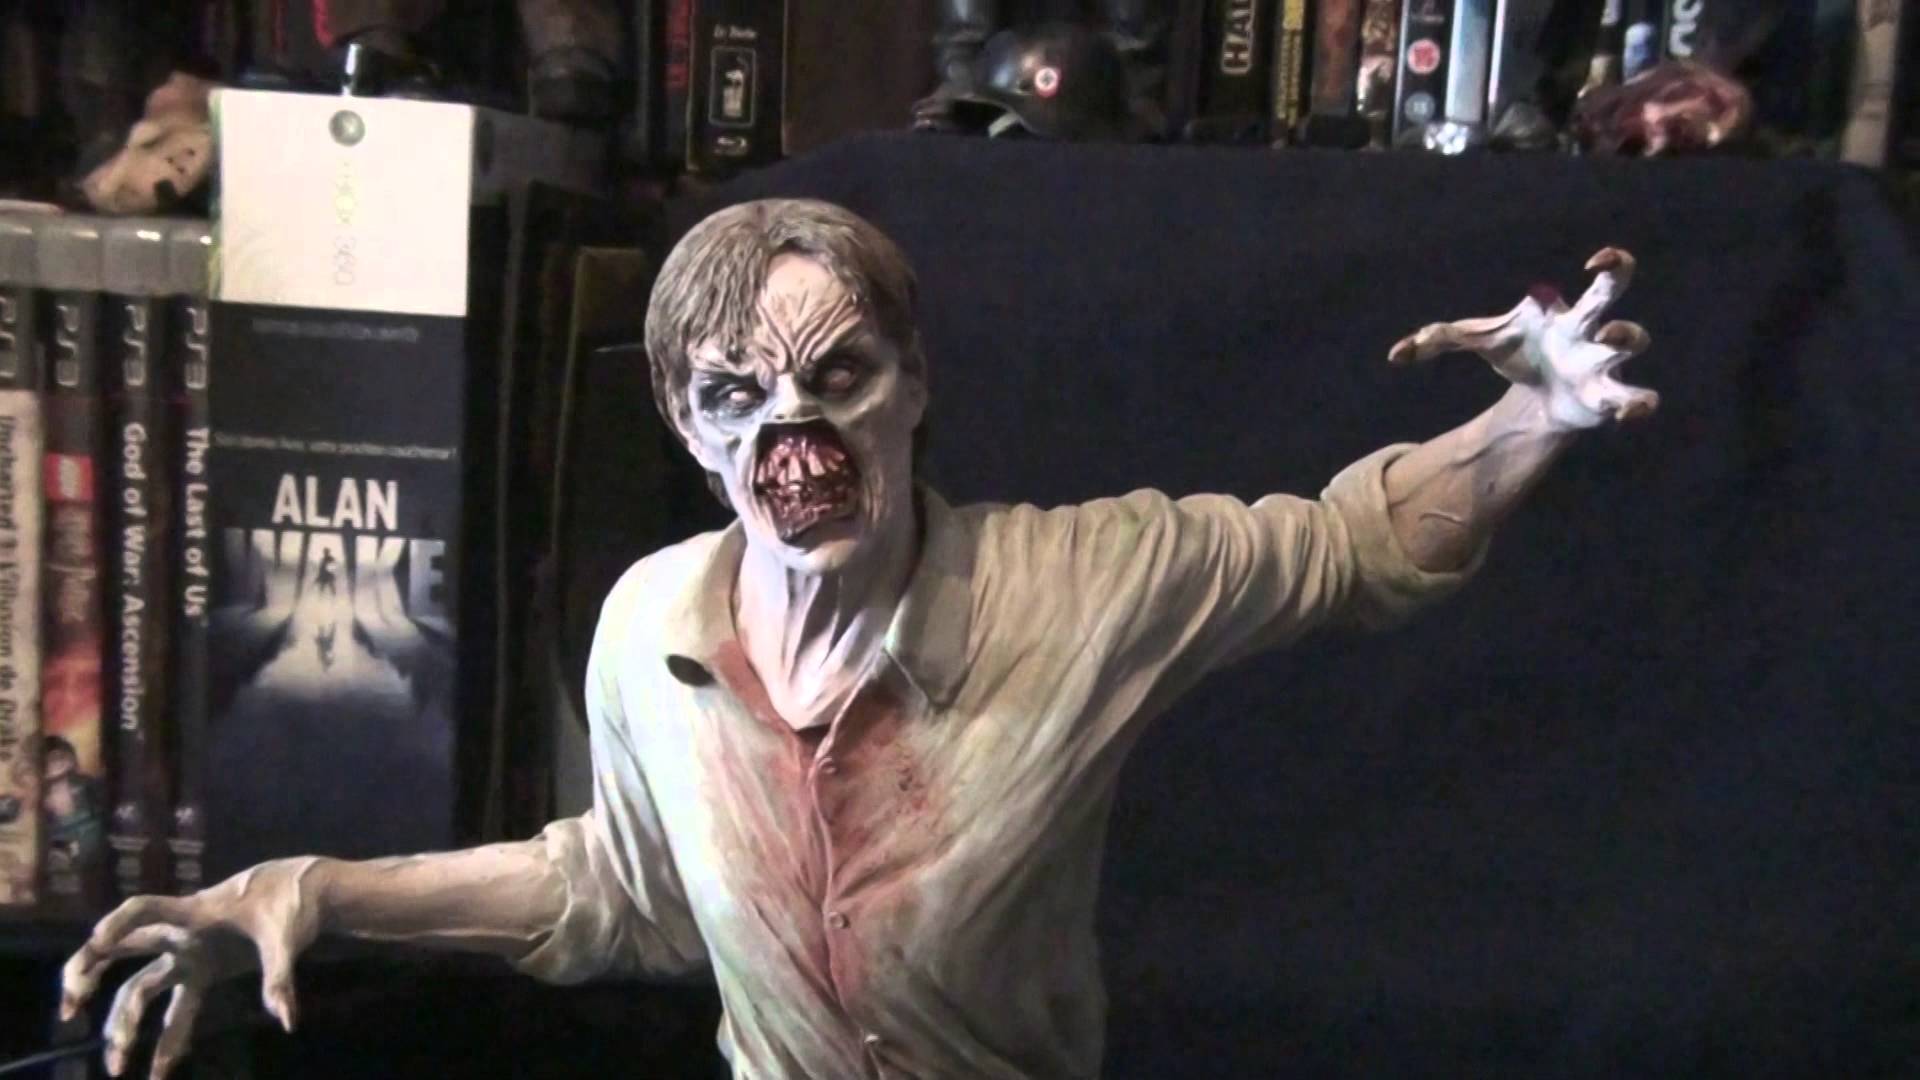 Evil Dead 2 - Dimensional Design Zombie Figure - YouTube